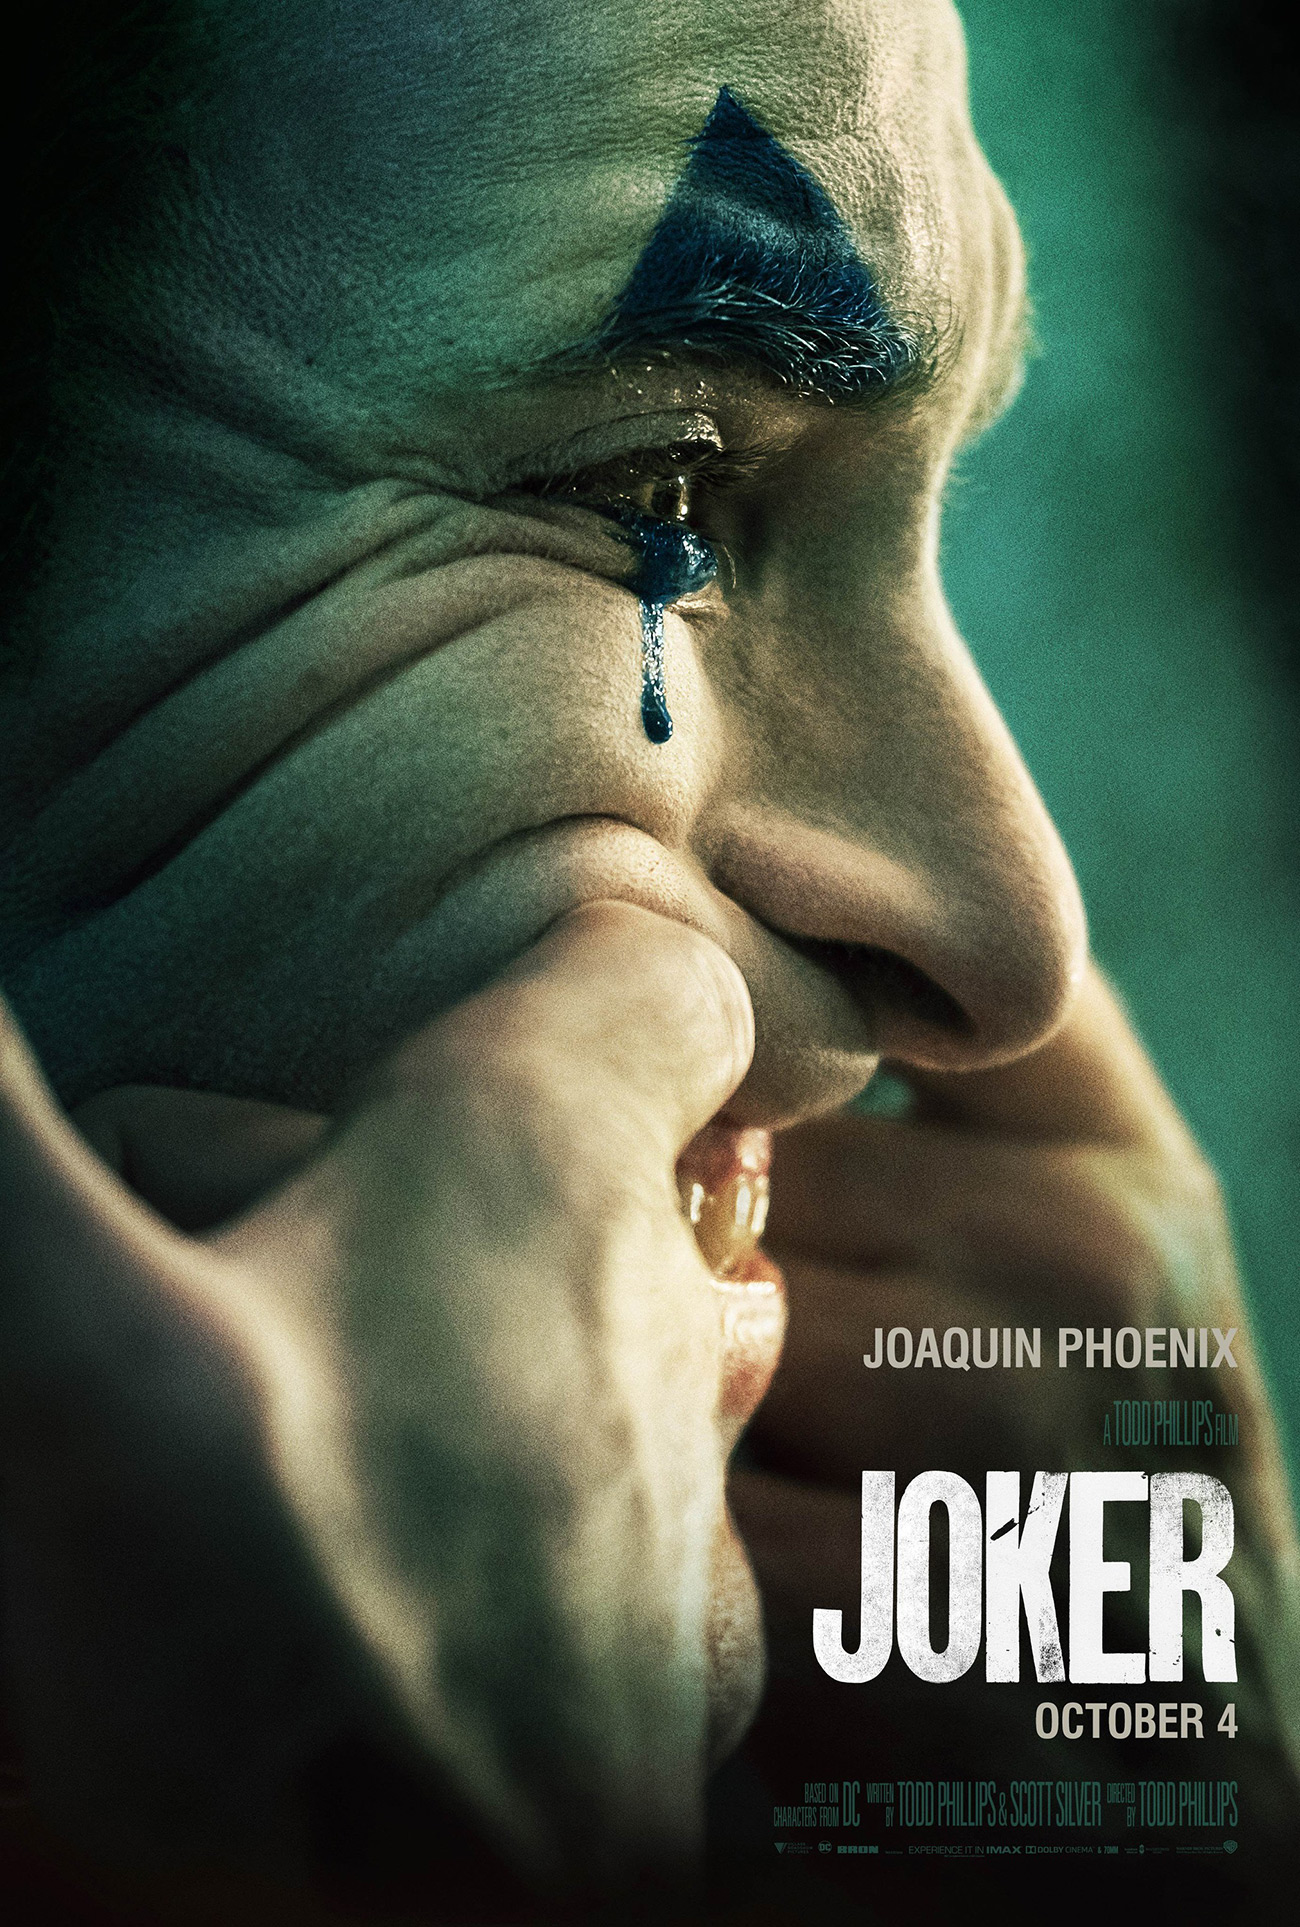 Wallpaper, Joker 2019 Movie, Joaquin Phoenix, actor, men, crying, movie poster, movies, DC Comics 1300x1927